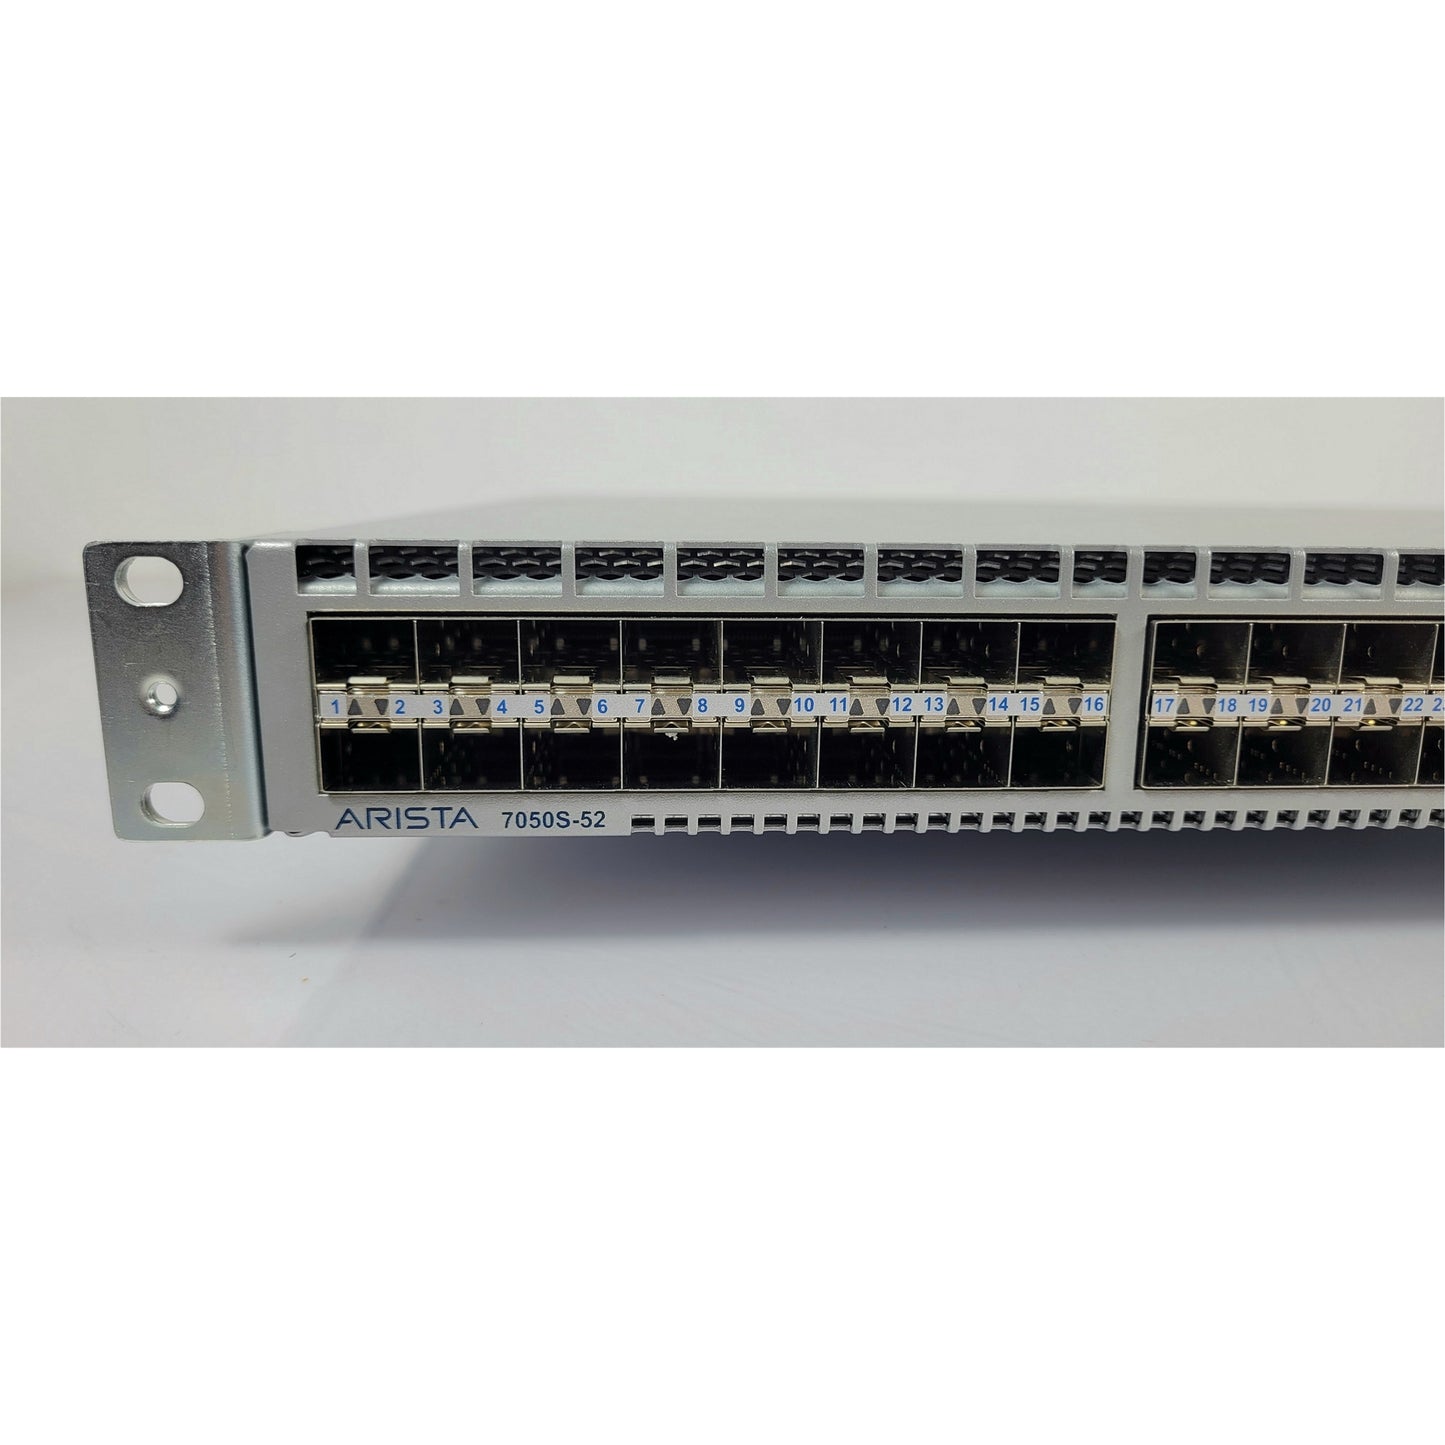 Arista DCS-7050S-52-F, 52x 10GbE (SFP+) switch (Used - Good)